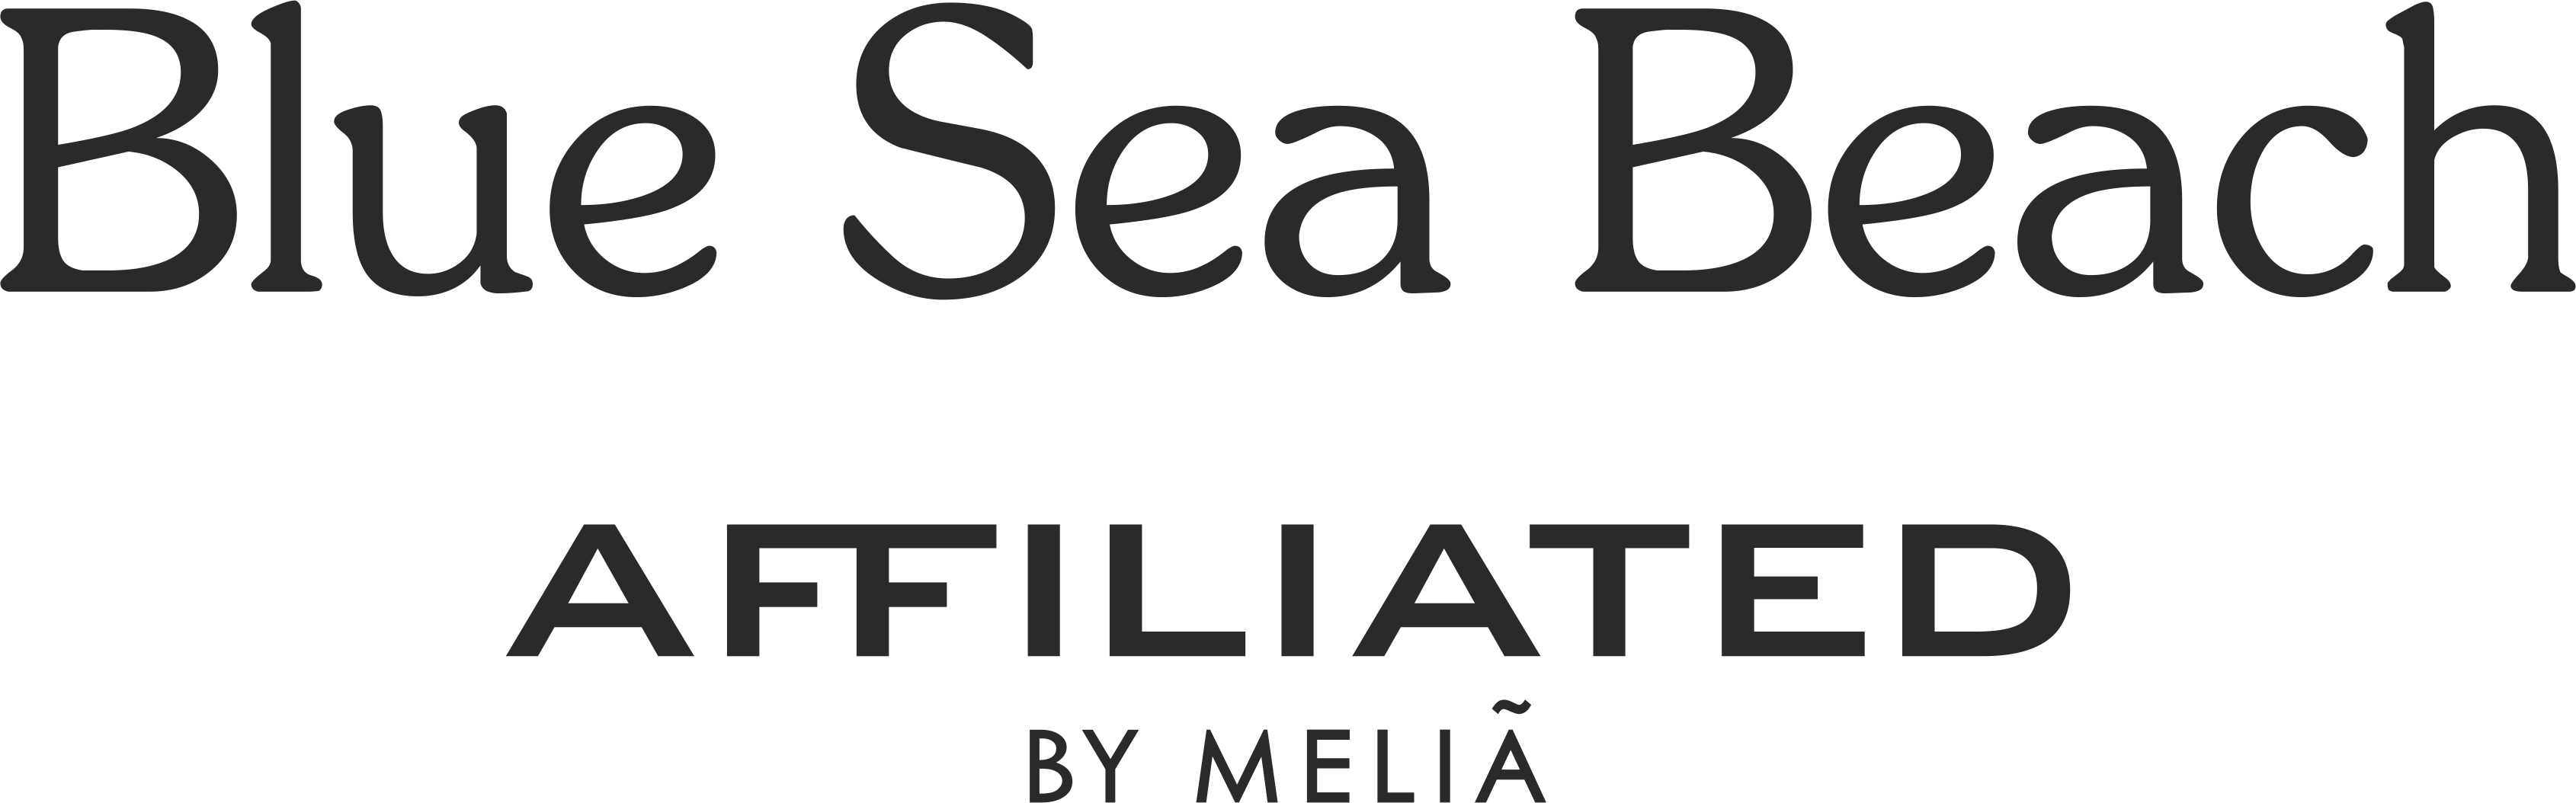 Blue Sea Beach Affiliated by Meliá Logo